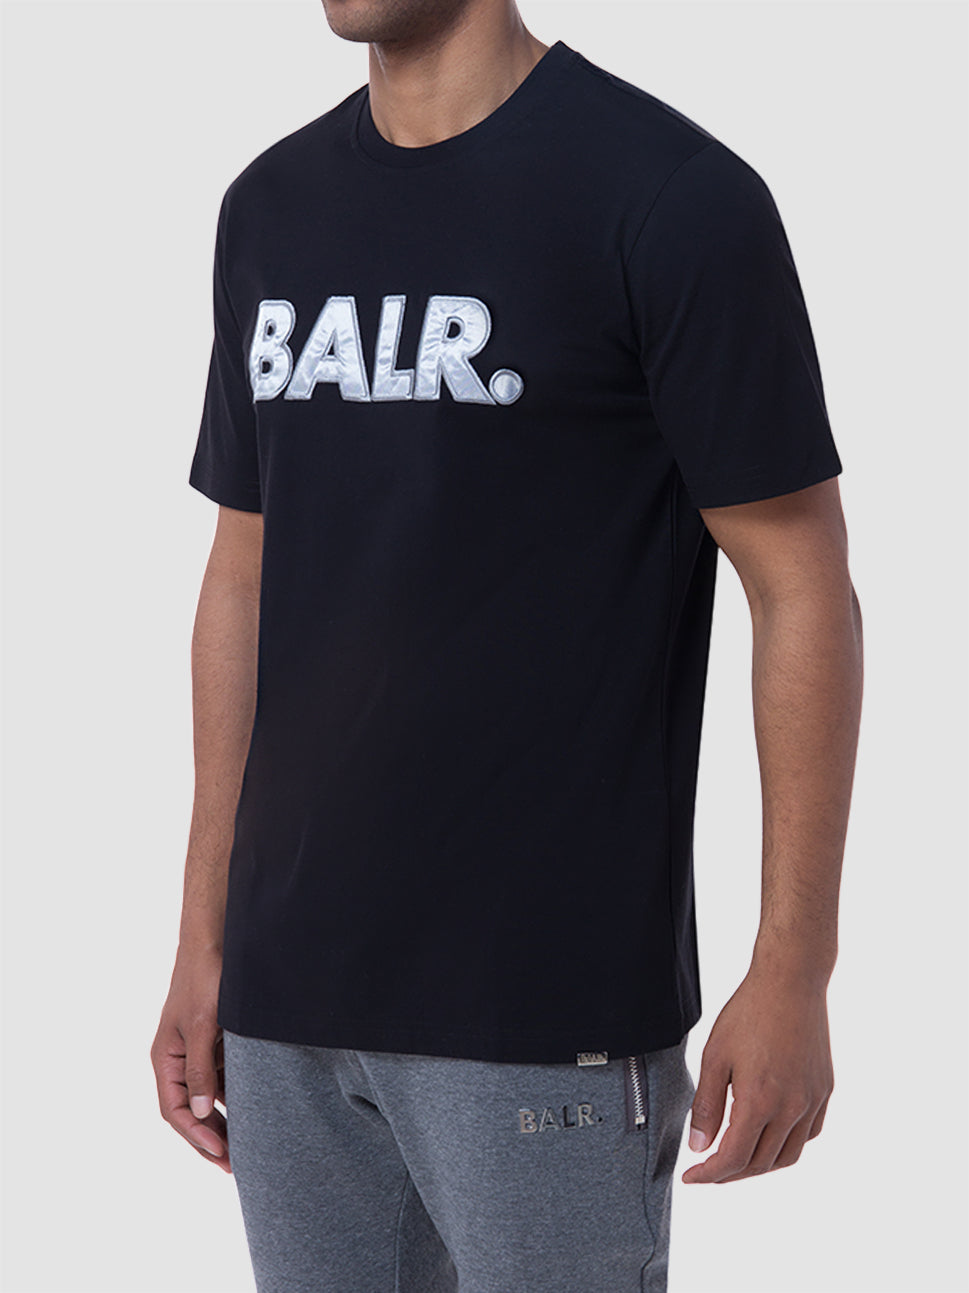 Balr Olaf Straight Balr Satin Embro T Shirt Jet Black